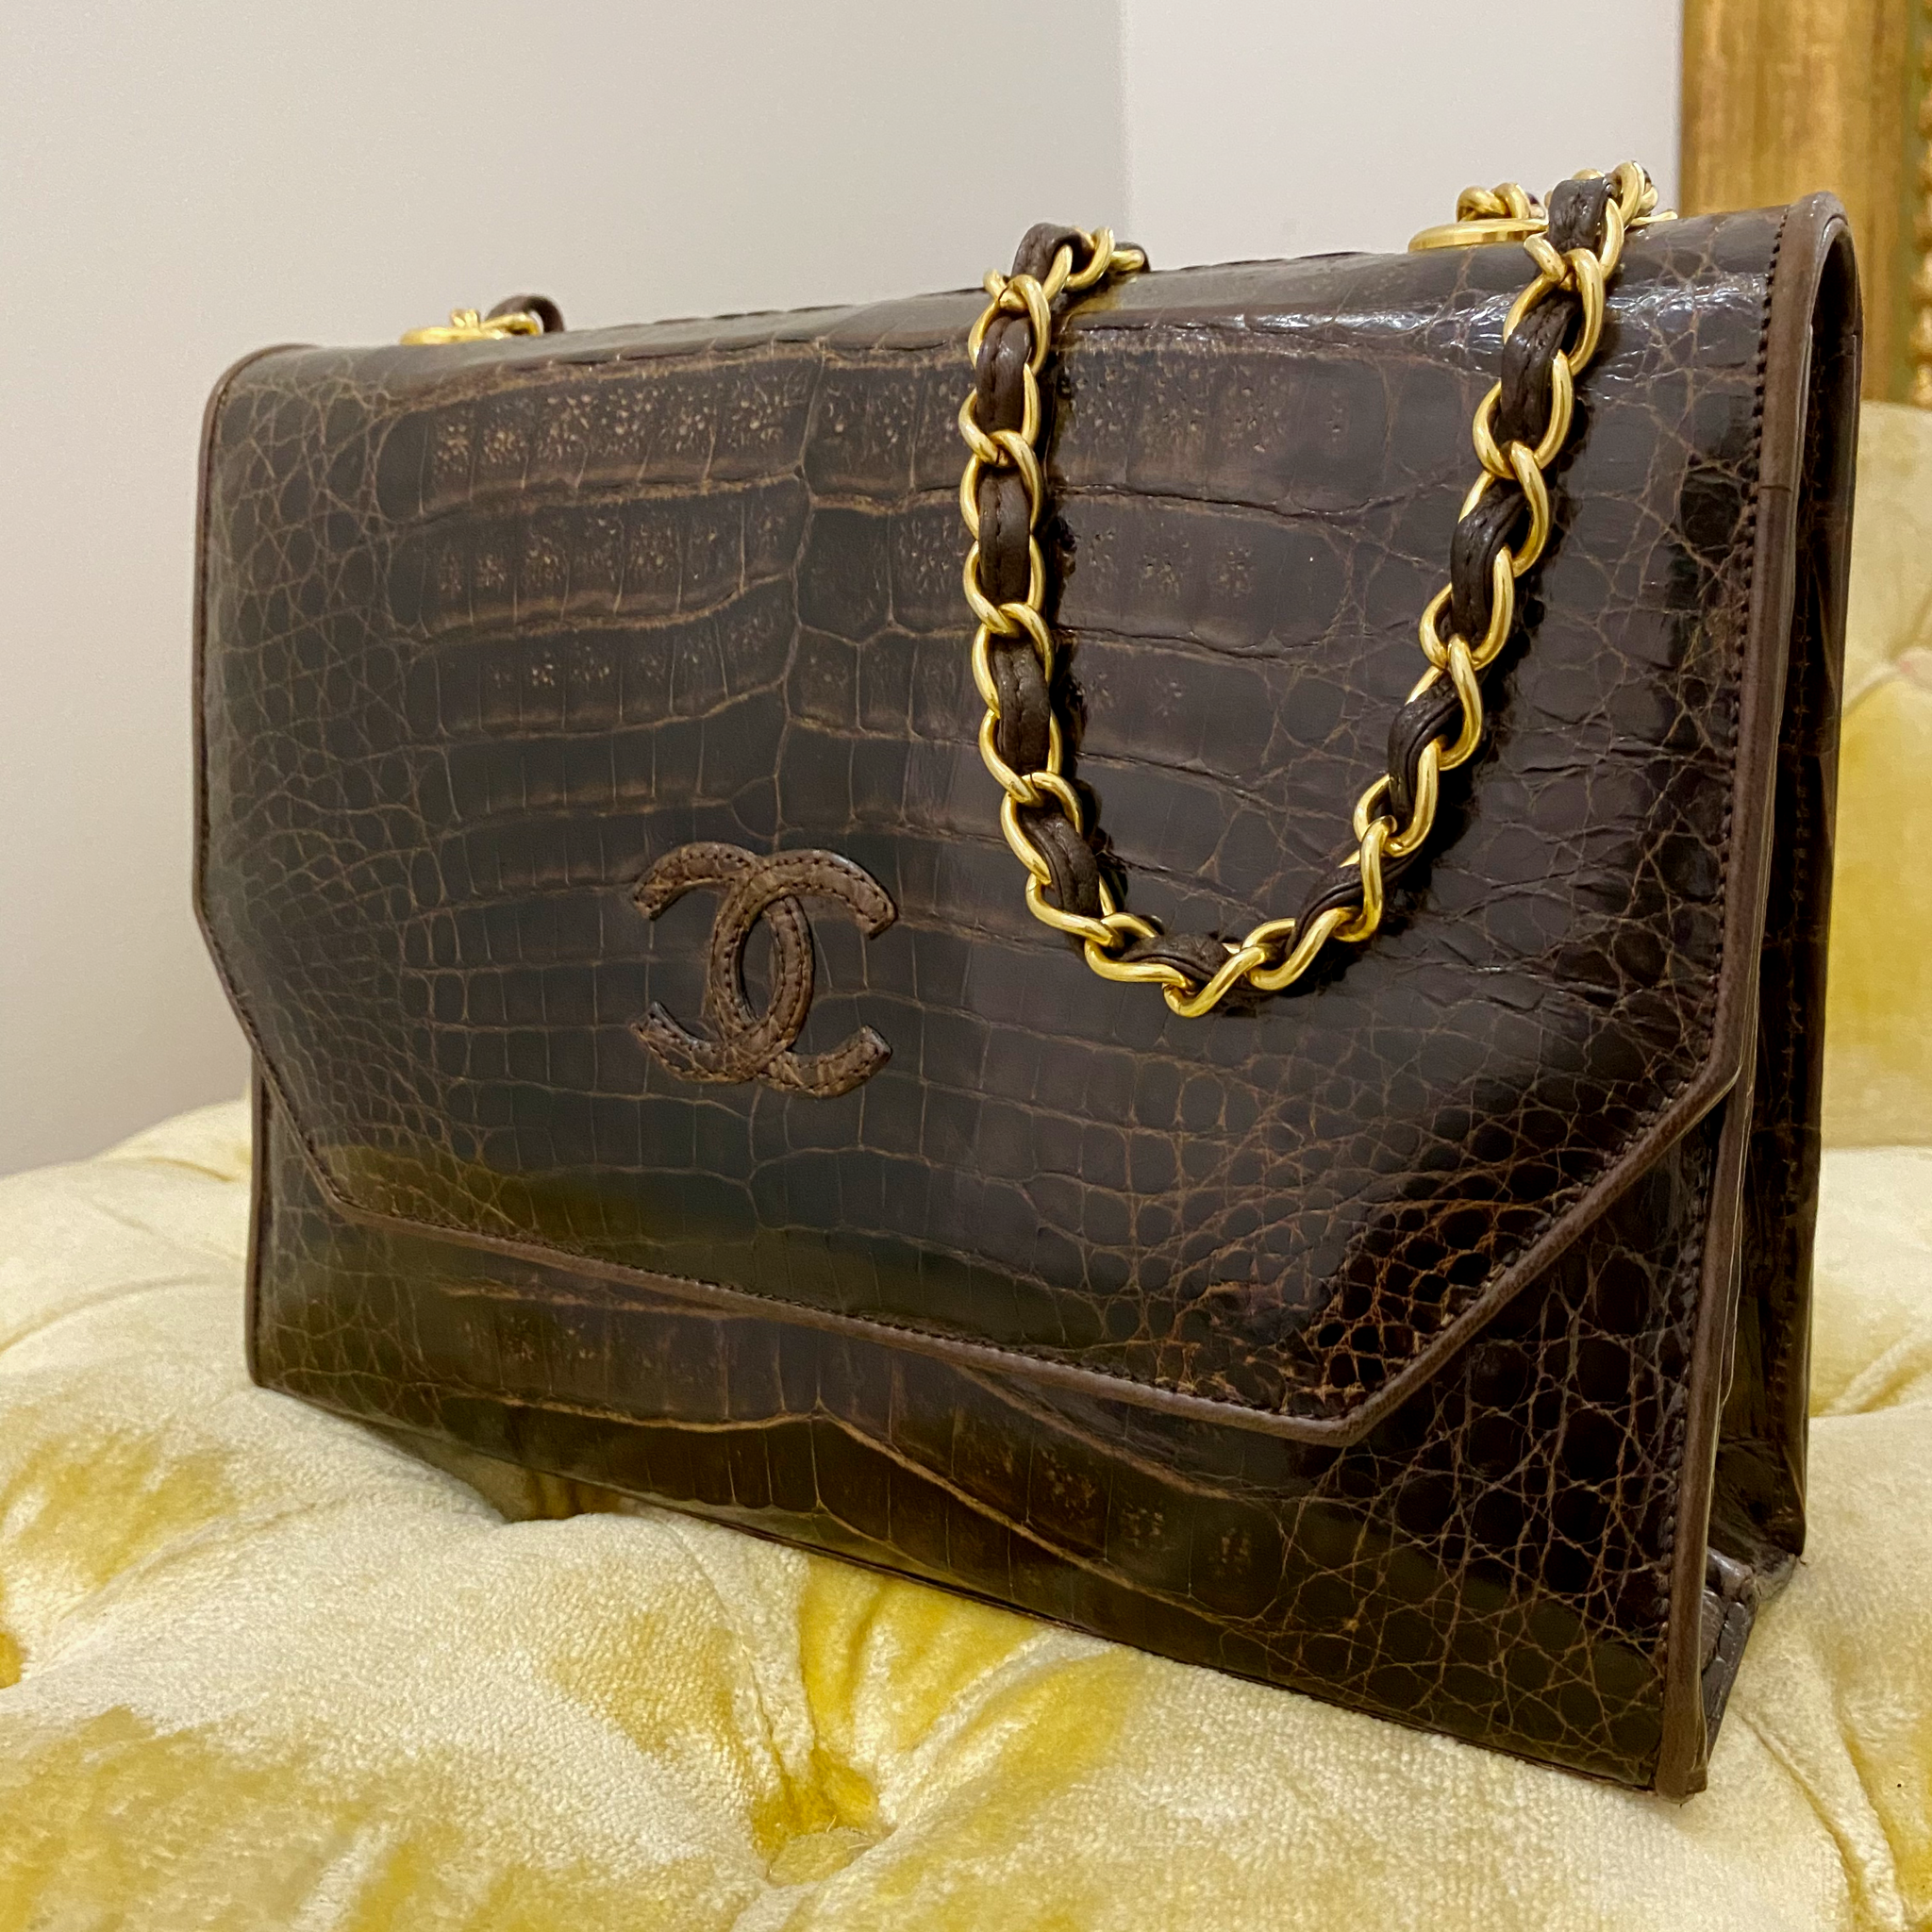 1970 Chanel Bag - 12 For Sale on 1stDibs